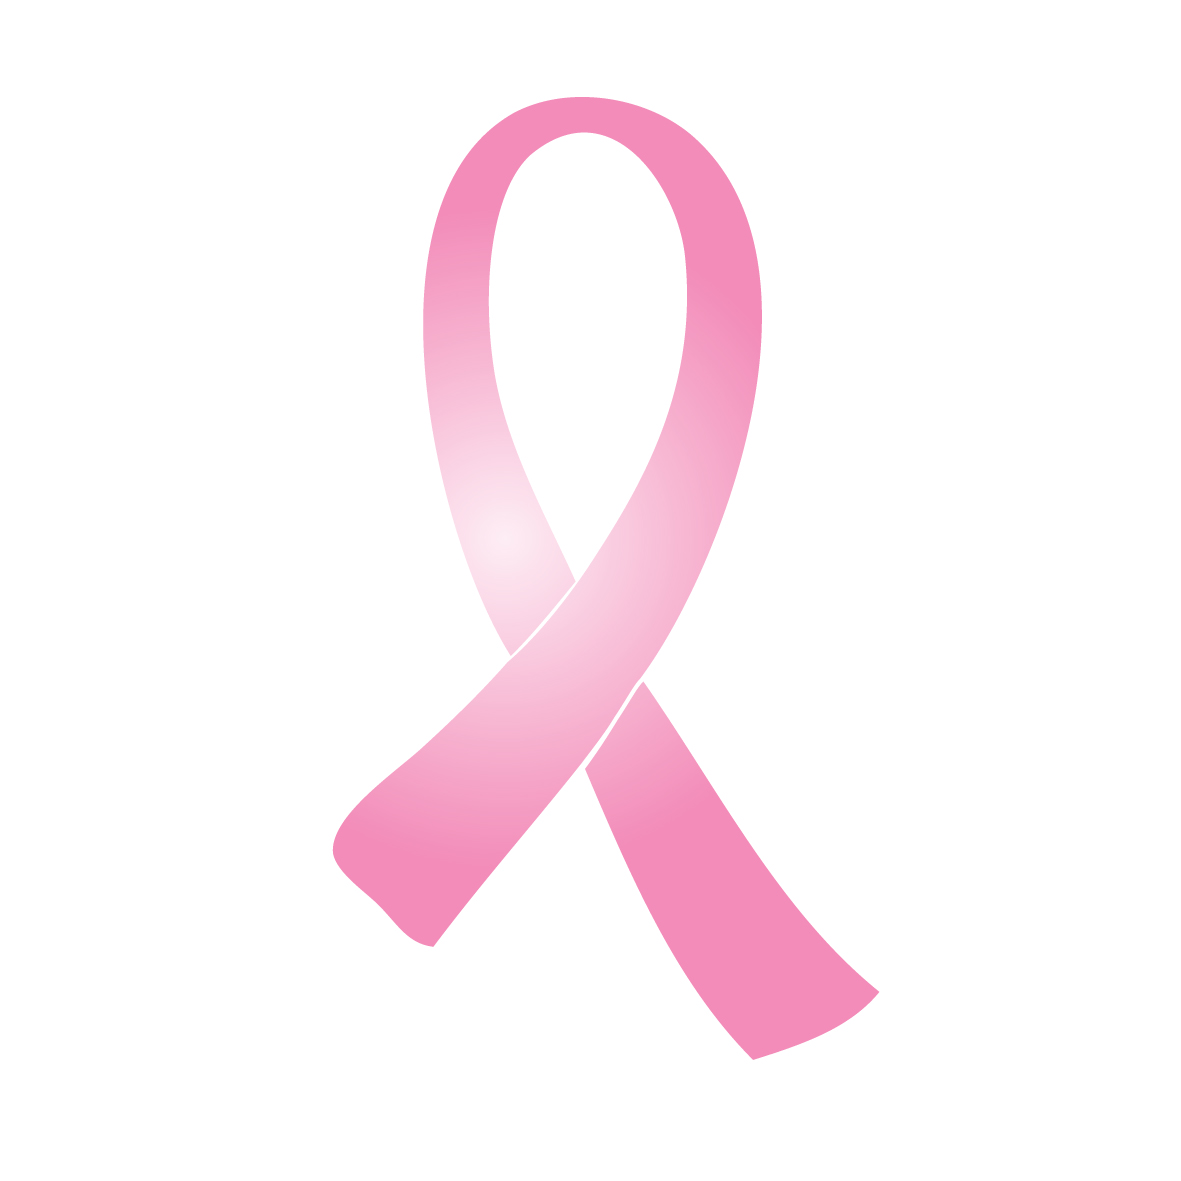 Cancer 753: Breast Cancer Ribbon 03